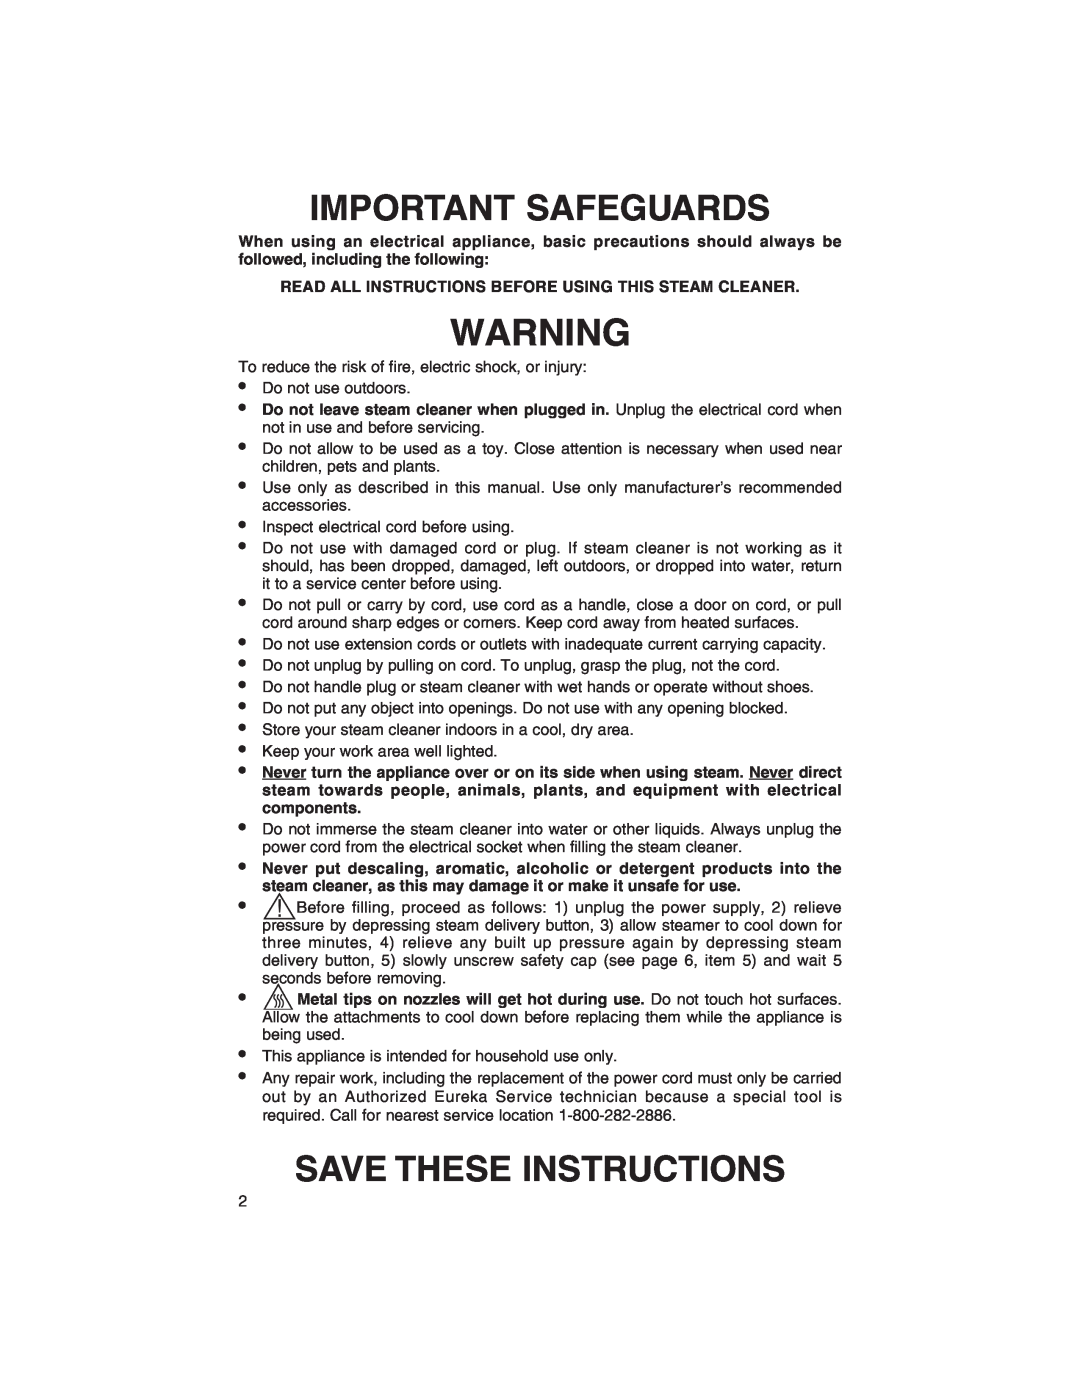 Eureka 350, 340 warranty Important Safeguards, Save These Instructions 